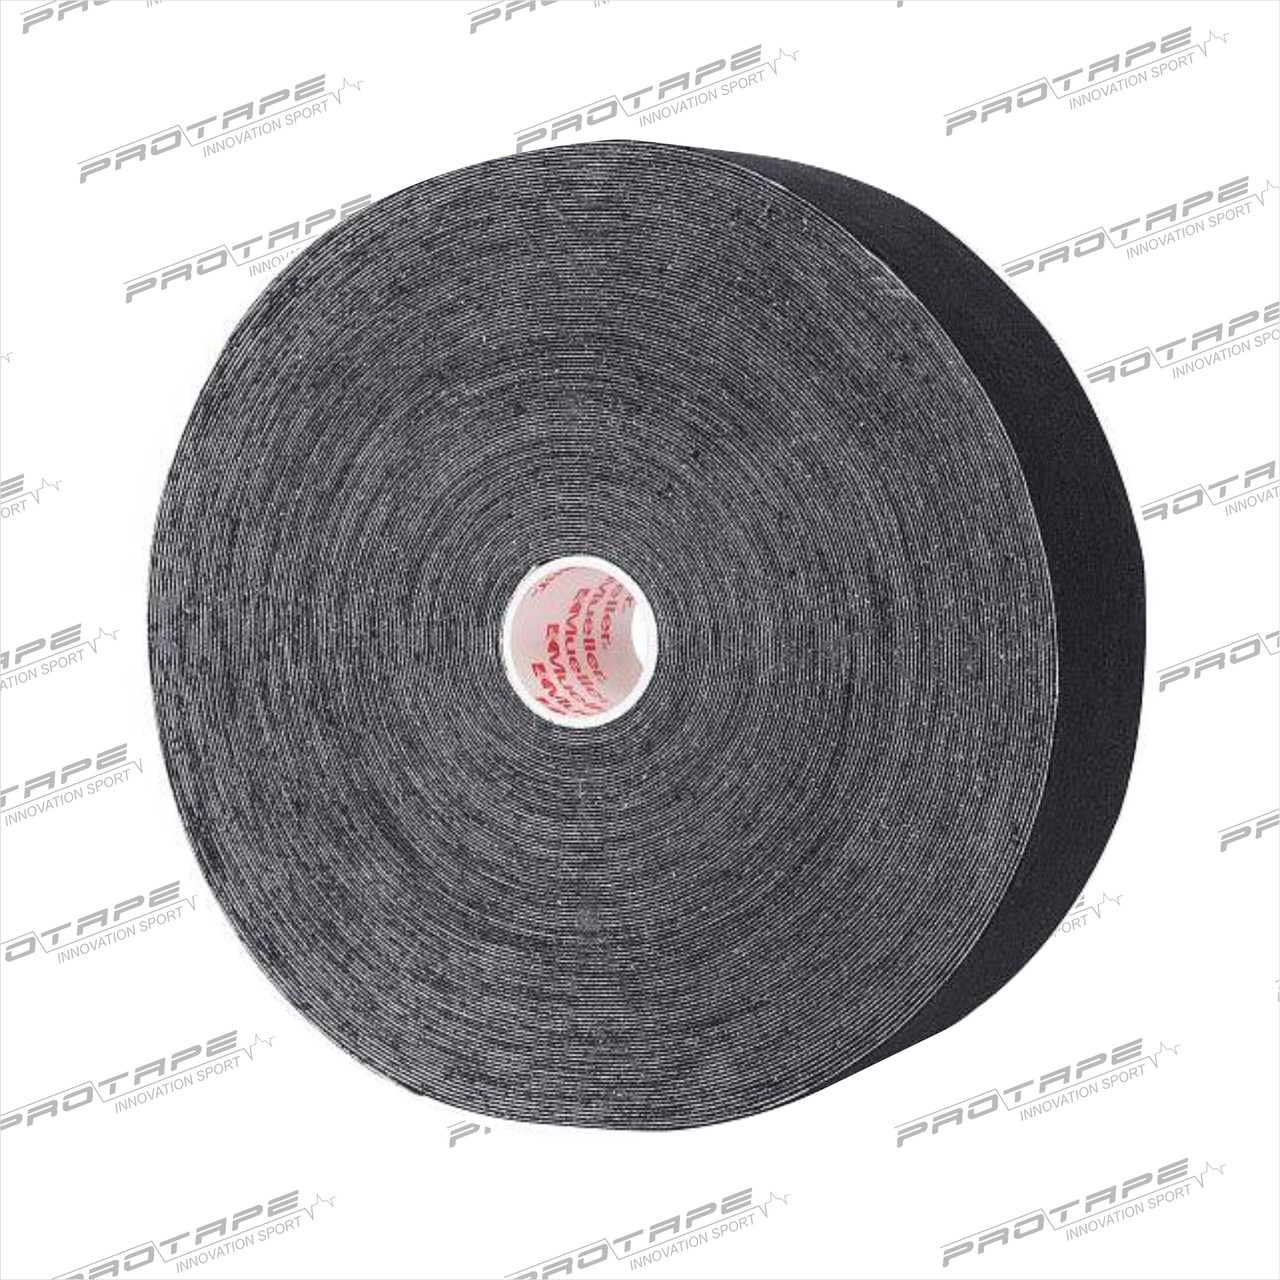 Кинезио тейп Mueller Kinesiology Tape Black 30 м, 27631, черный цвет, 5.0см размер